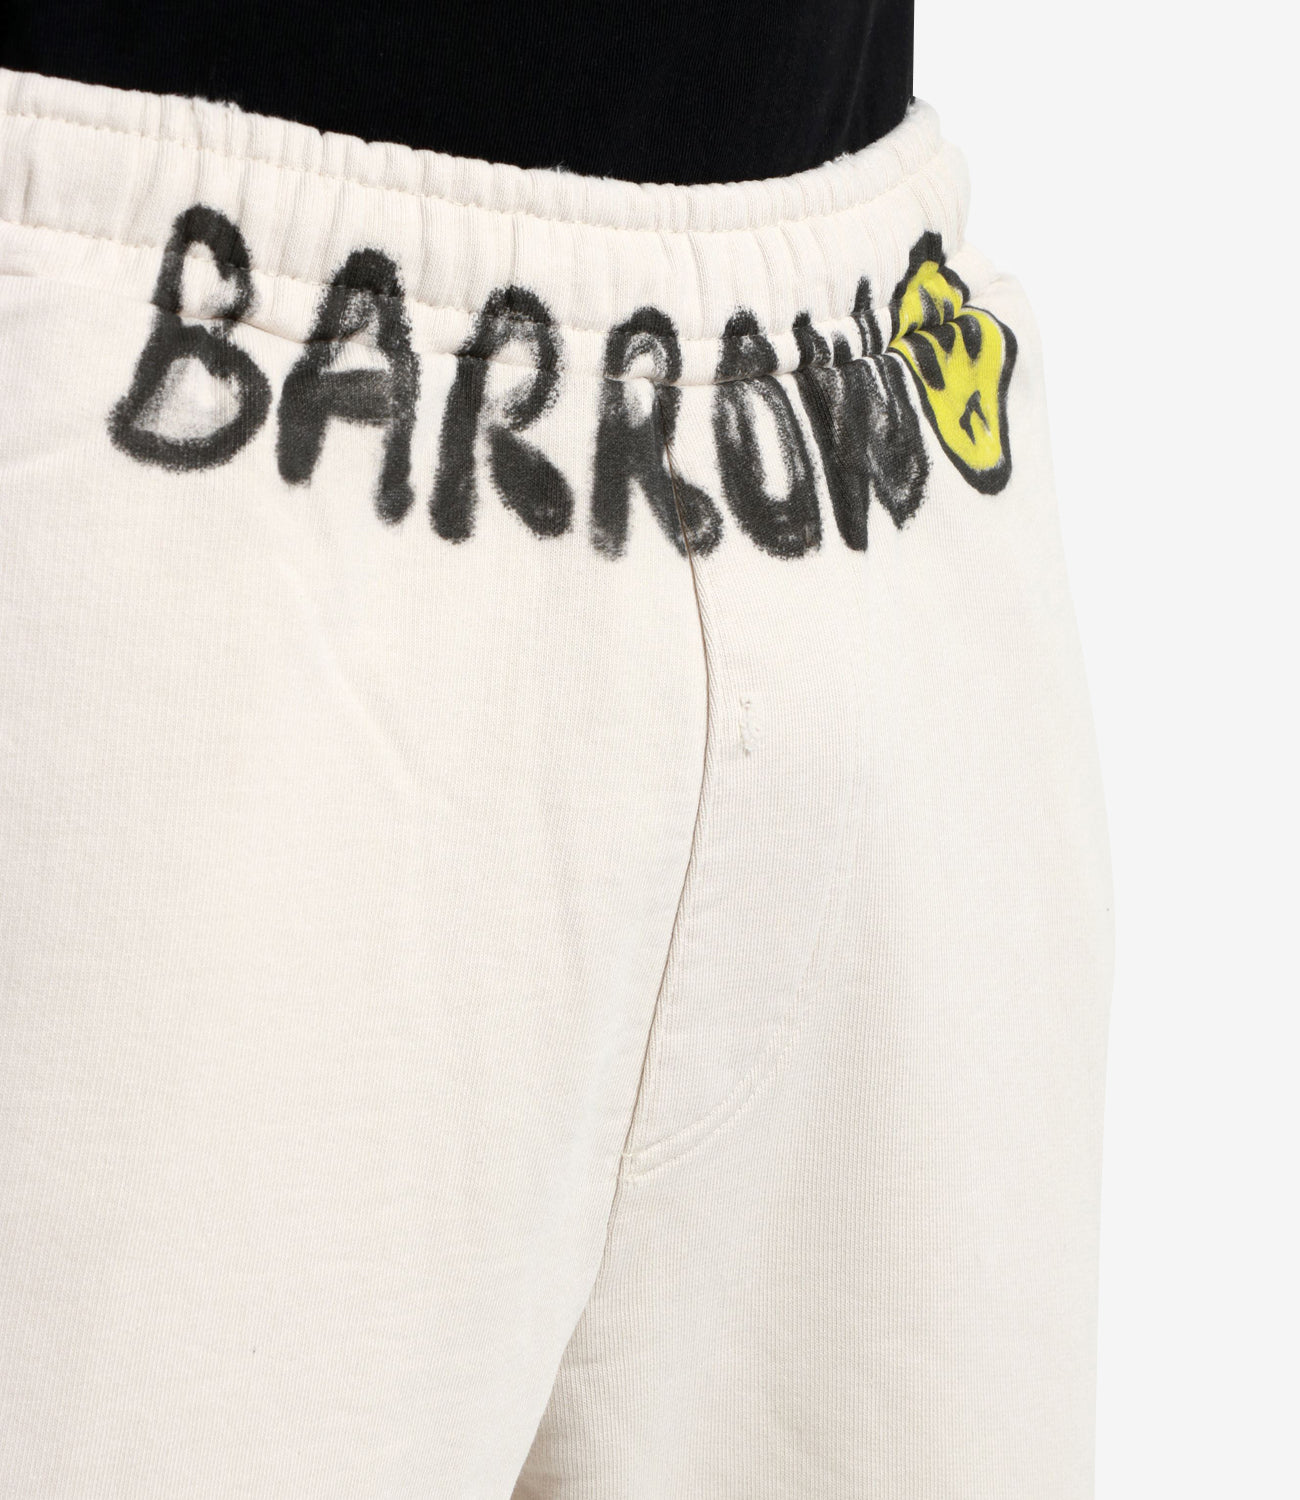 Barrow | Pantalone Panna